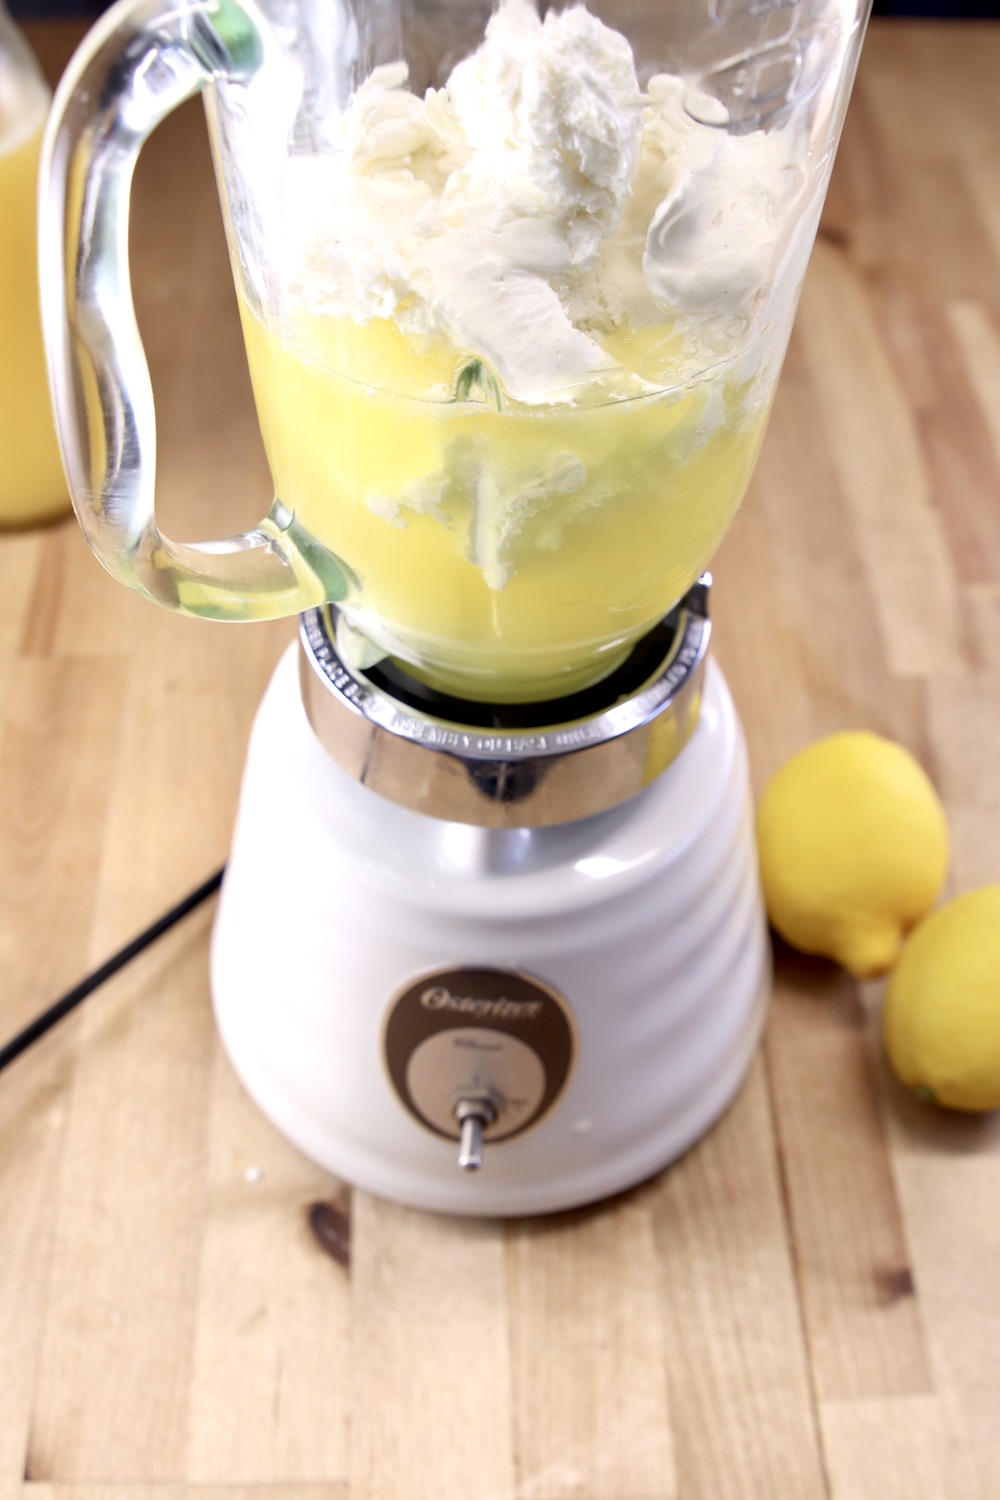 blender with lemon -pineapple and ice cream